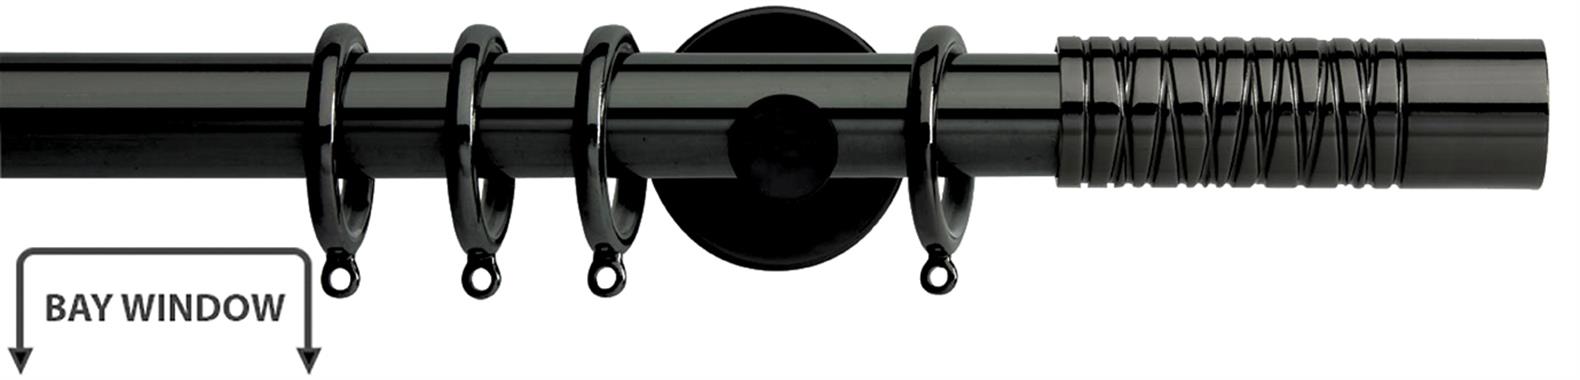 Neo Premium 28mm Bay Window Pole Black Nickel Wired Barrel